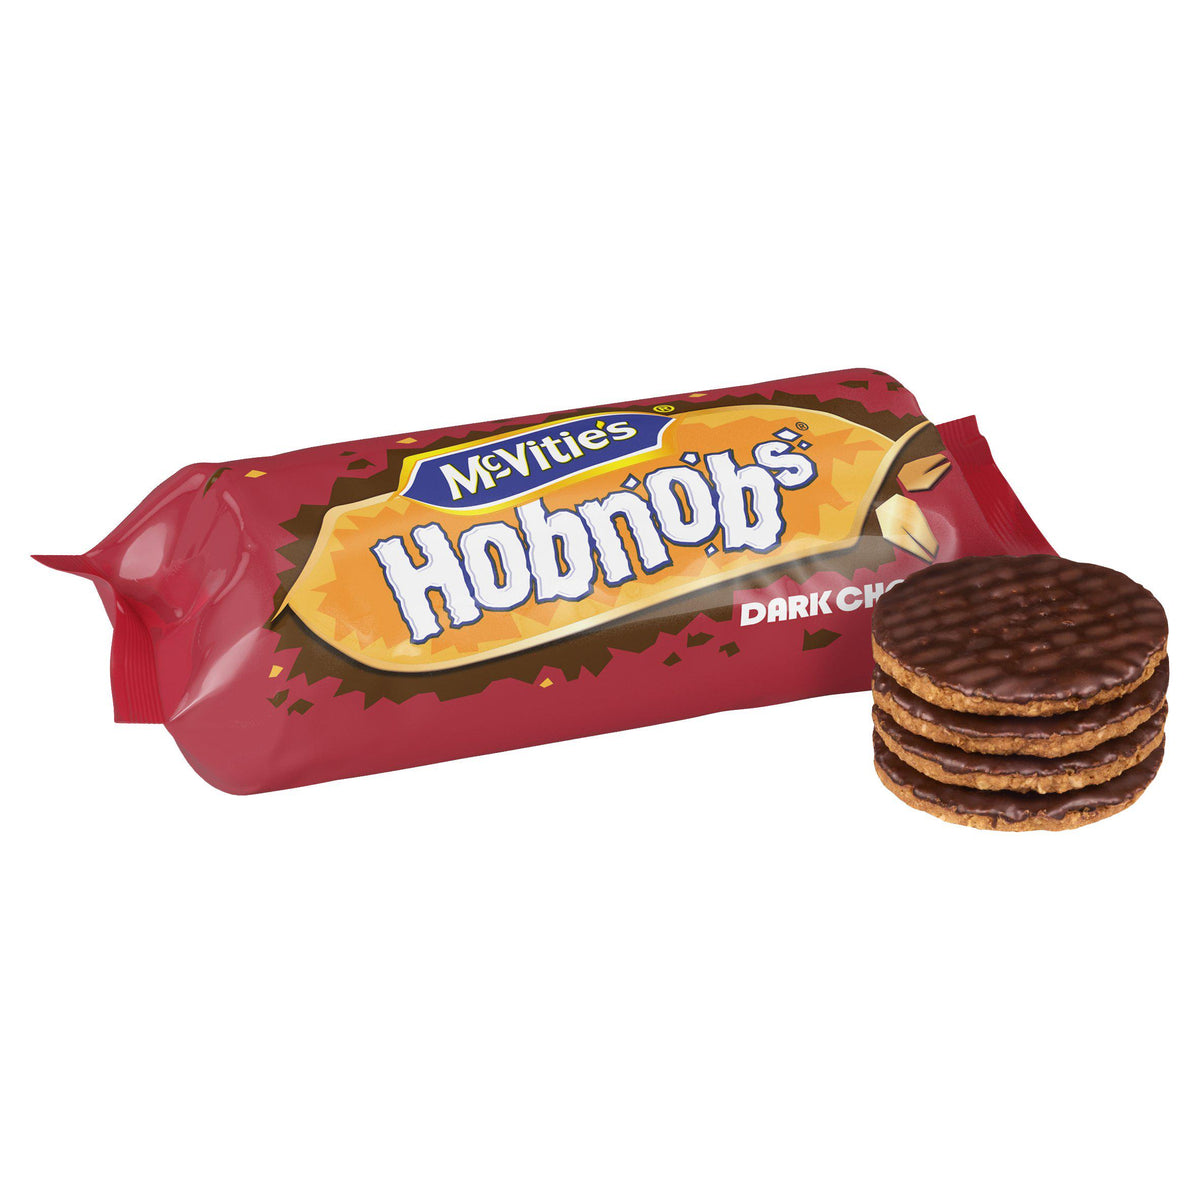 McVities Hob Nobs Dark - Plain Chocolate Roll x 12